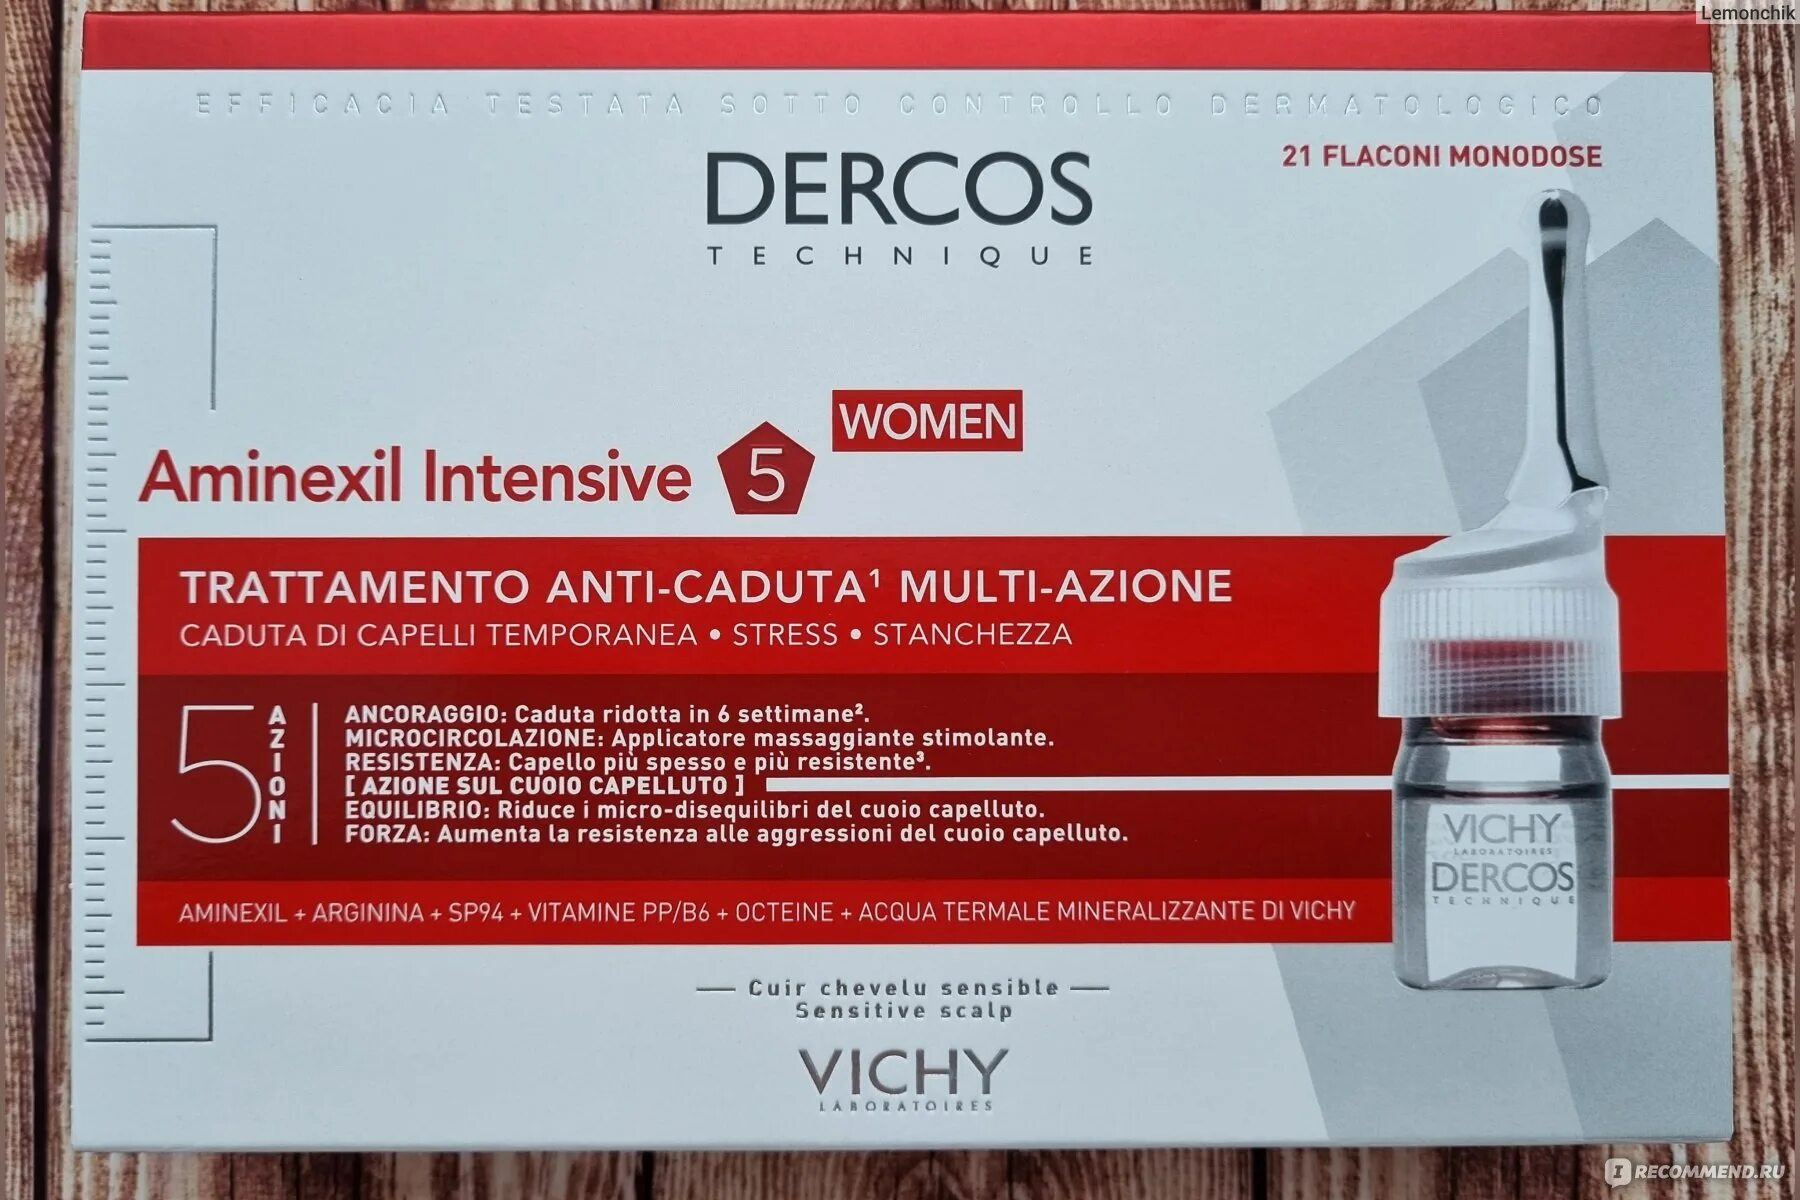 Vichy dercos aminexil intensive 5 цены. Vichy Dercos Aminexil Intensive 5 для женщин. Средство от выпадения волос для женщин. Средство от выпадения волос для женщин при беременности. Сравнение Dercos Vichy Aminexil Intensive 5 с маслом розмарина.